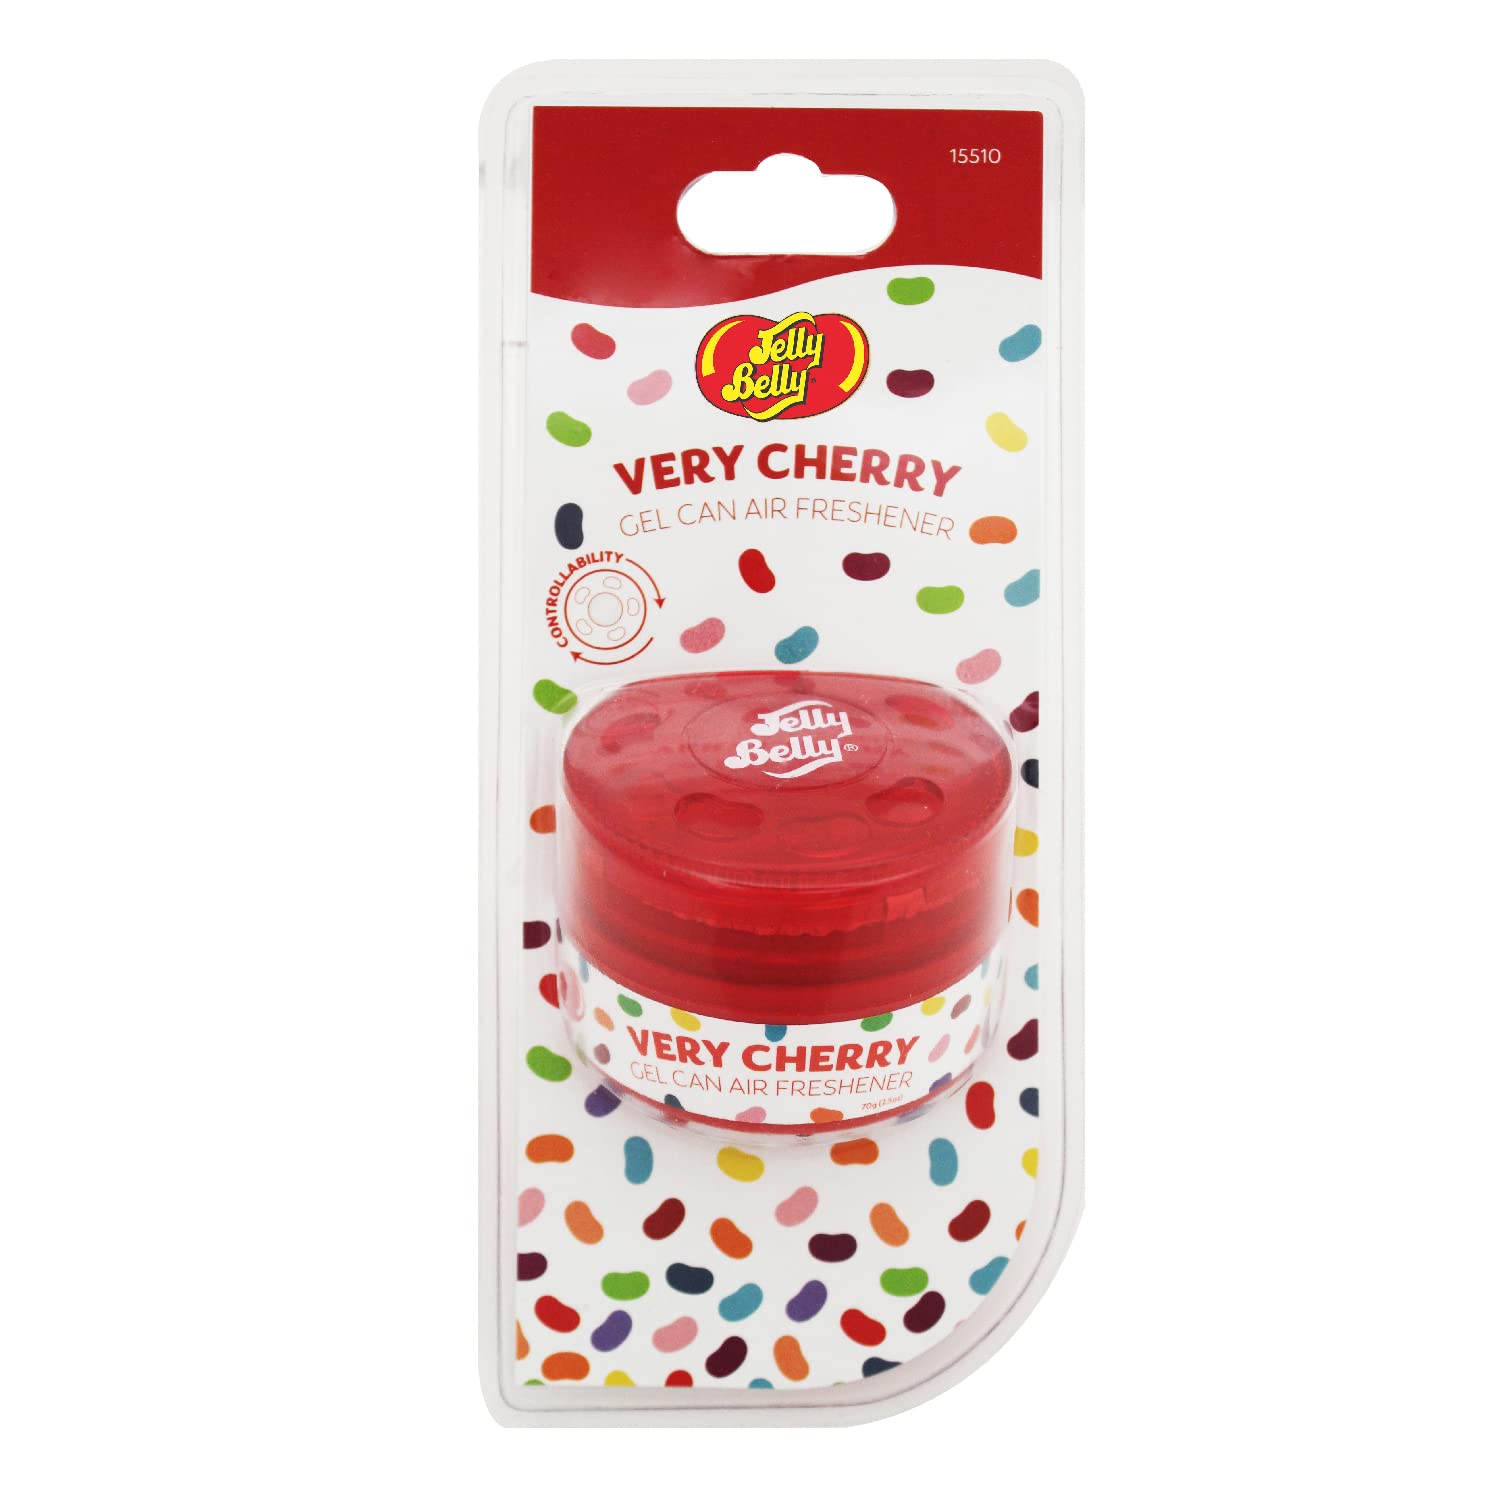 Jelly Belly Car Air Freshener - Very Cherry Gel Can Car Freshener. Car ...